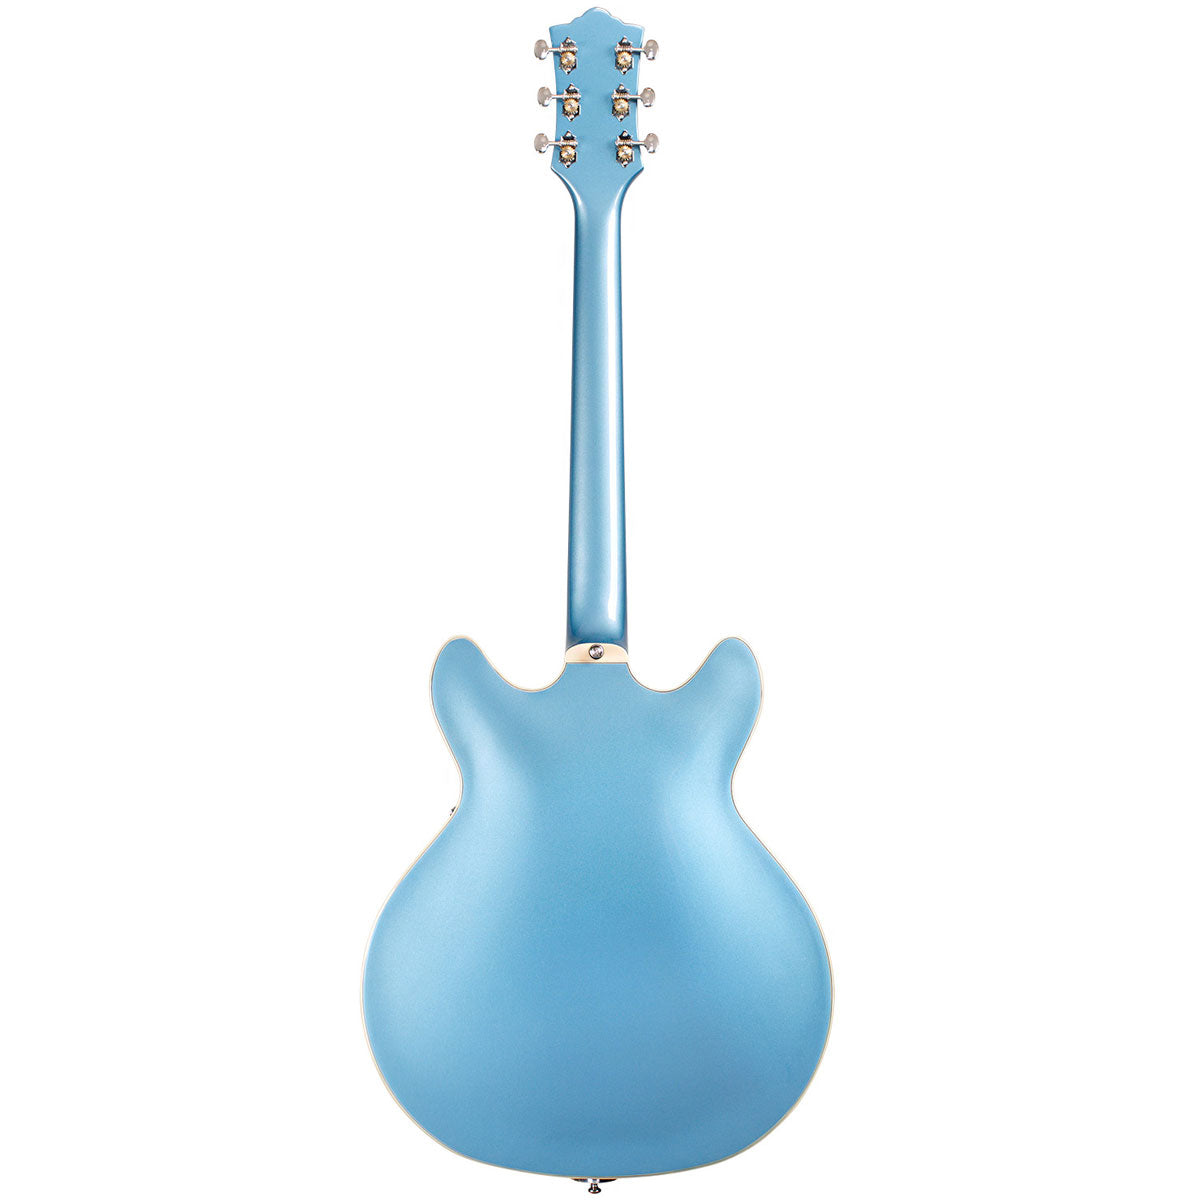 Guild Starfire DC Electric Guitar - Pelham Blue with Guild Vibrato Tailpiece